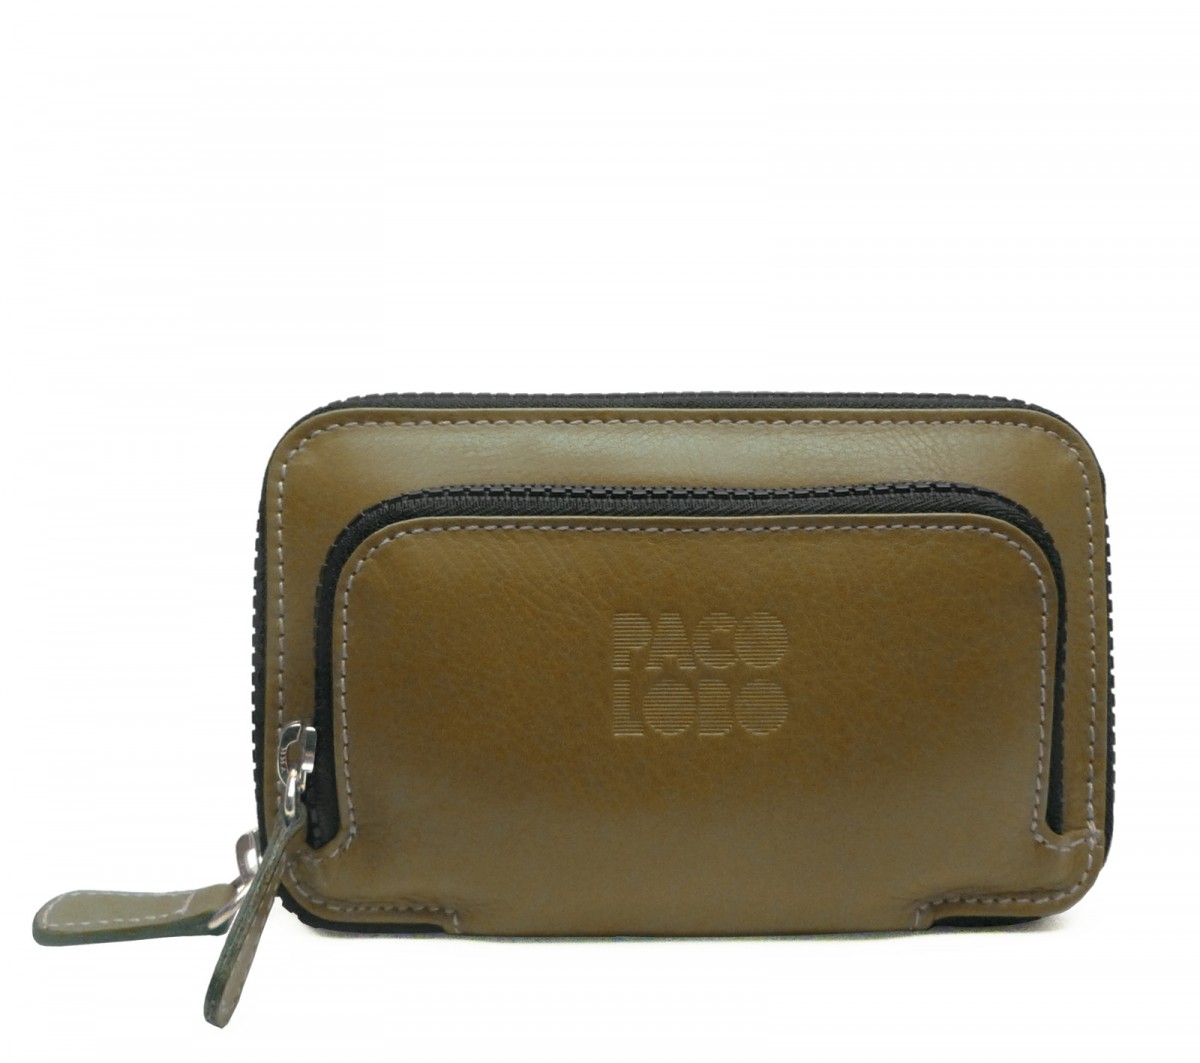 Medium wallet with double zipper Mak